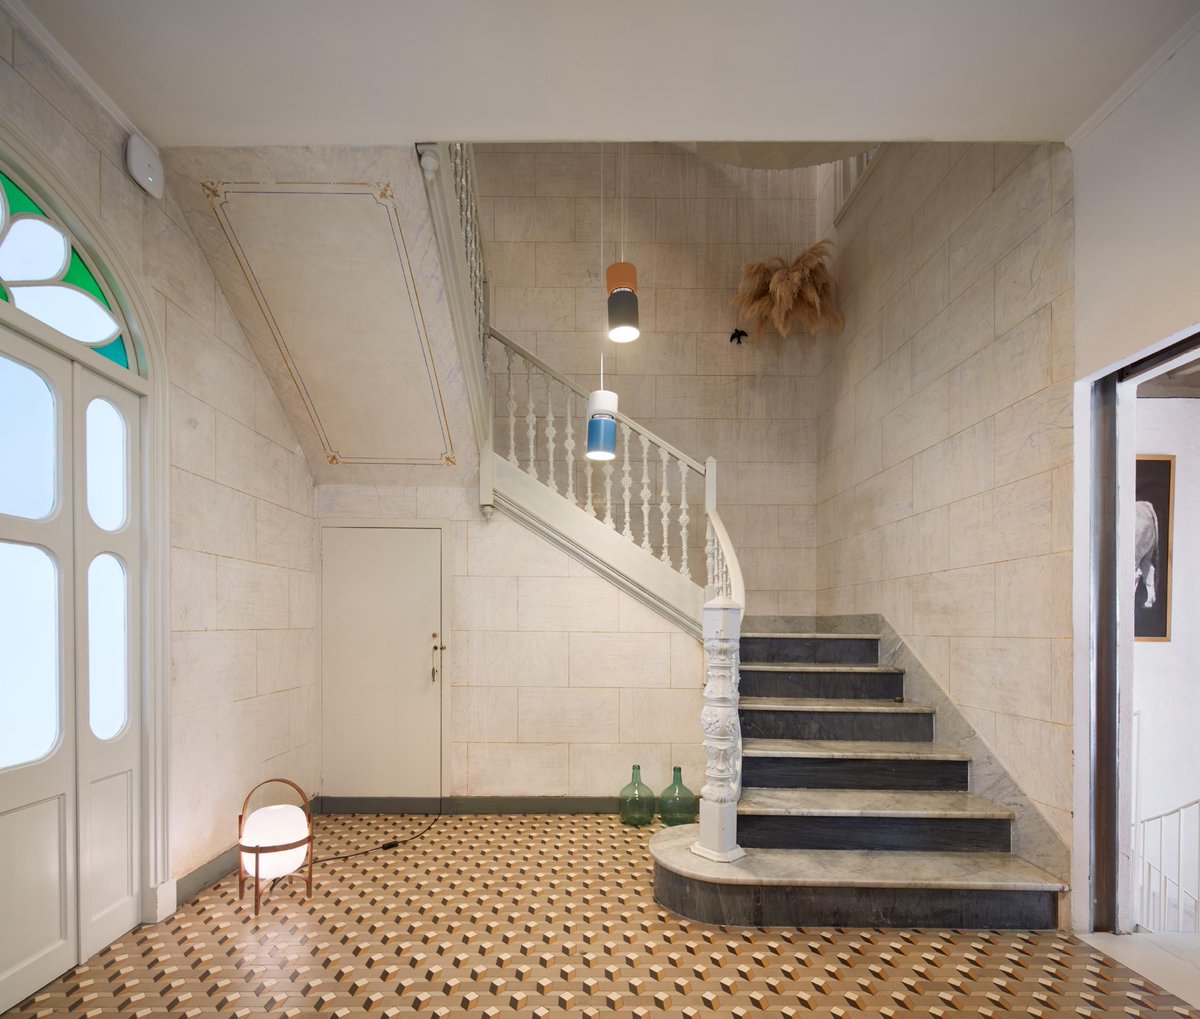 Hevresac by Emma Martí #interiordesign #homedecor #homeinspo #interiors